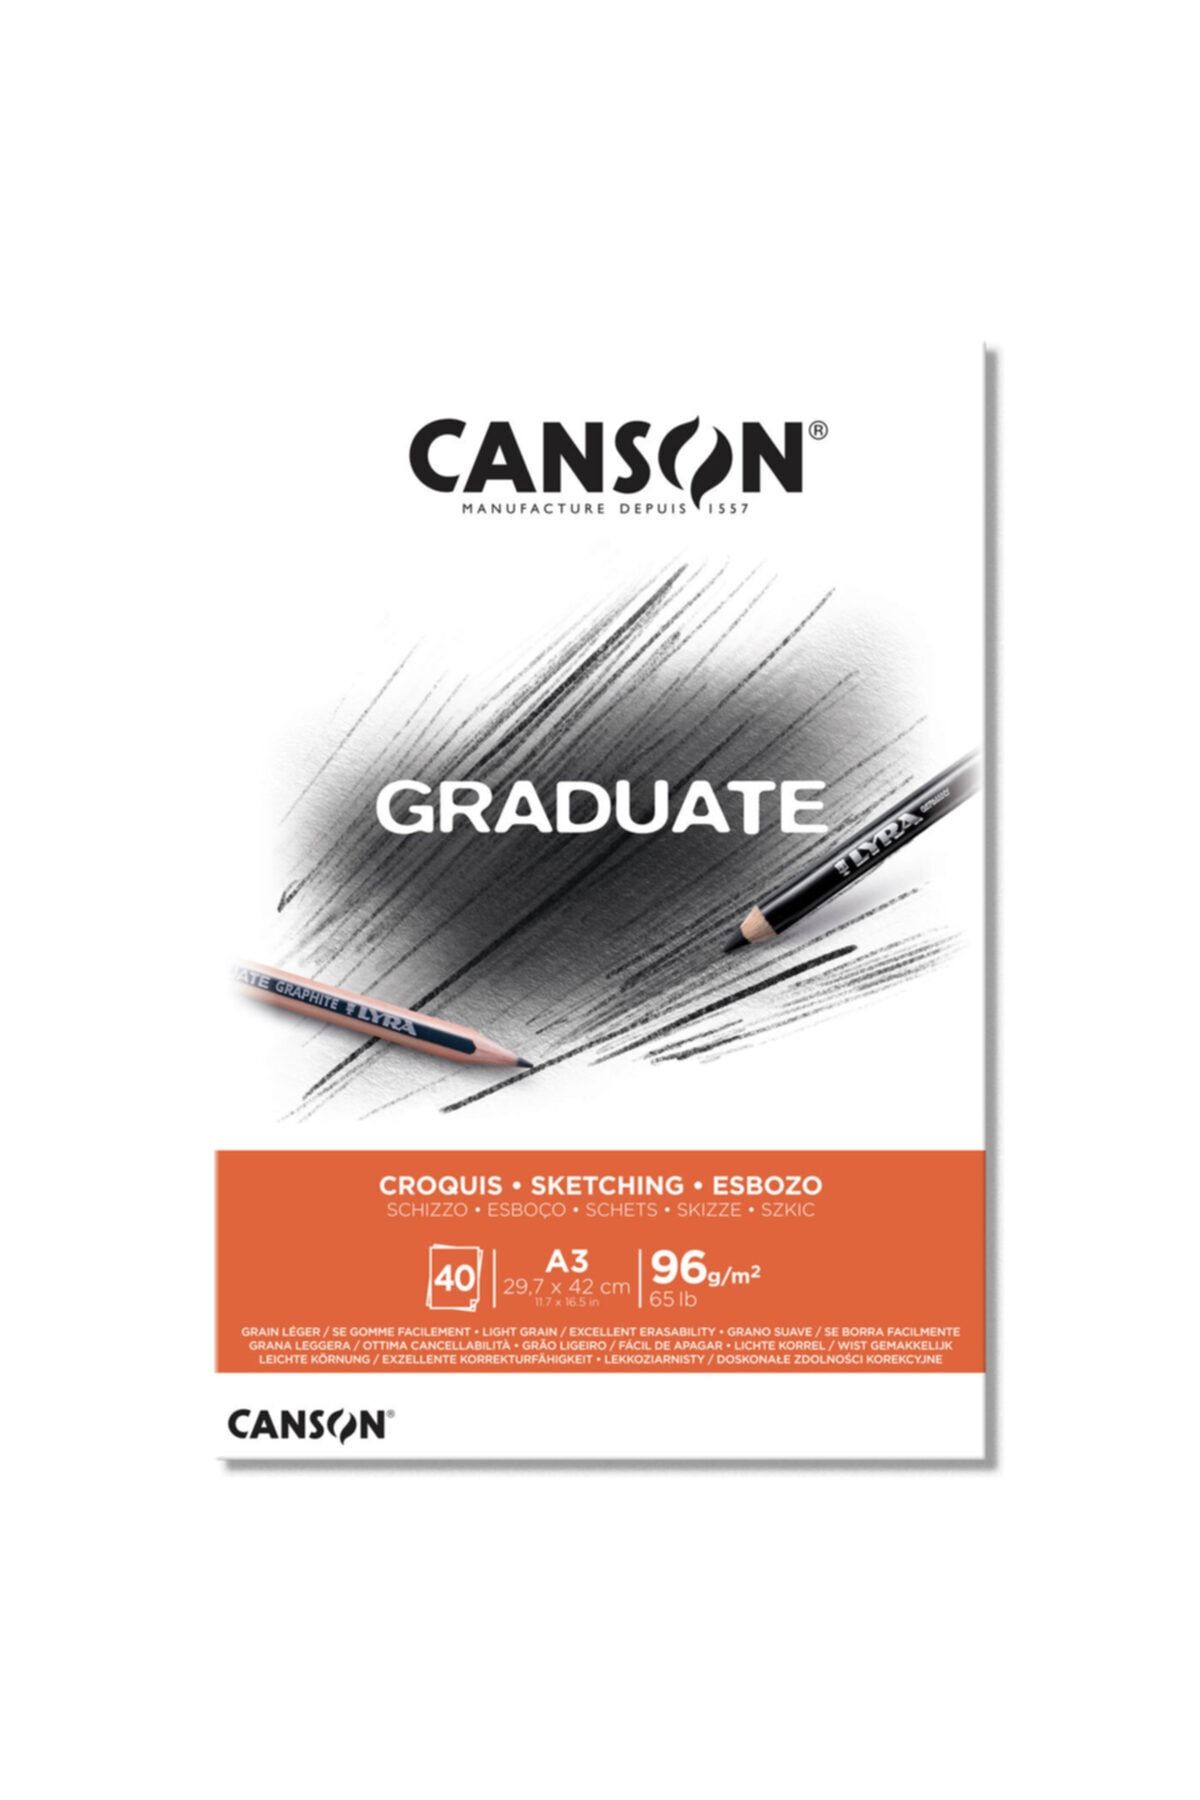 Canson Graduate Sketching Eskiz Defteri 96 Gr. A3 40 Yp.